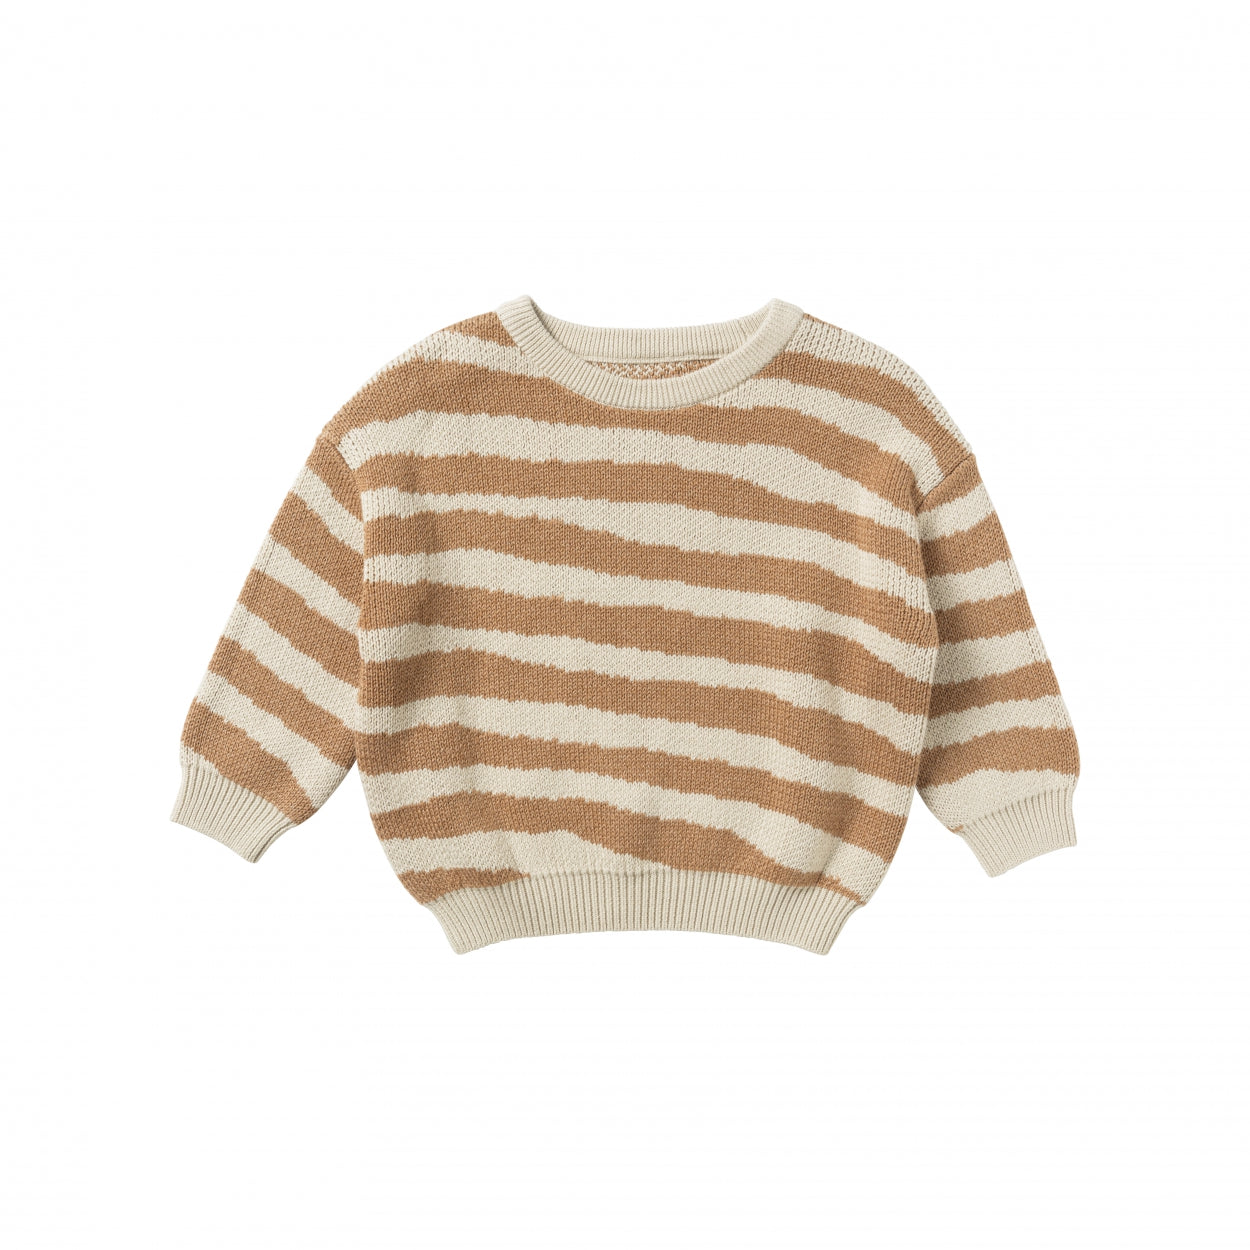 Sweater Nevada - cross stripe